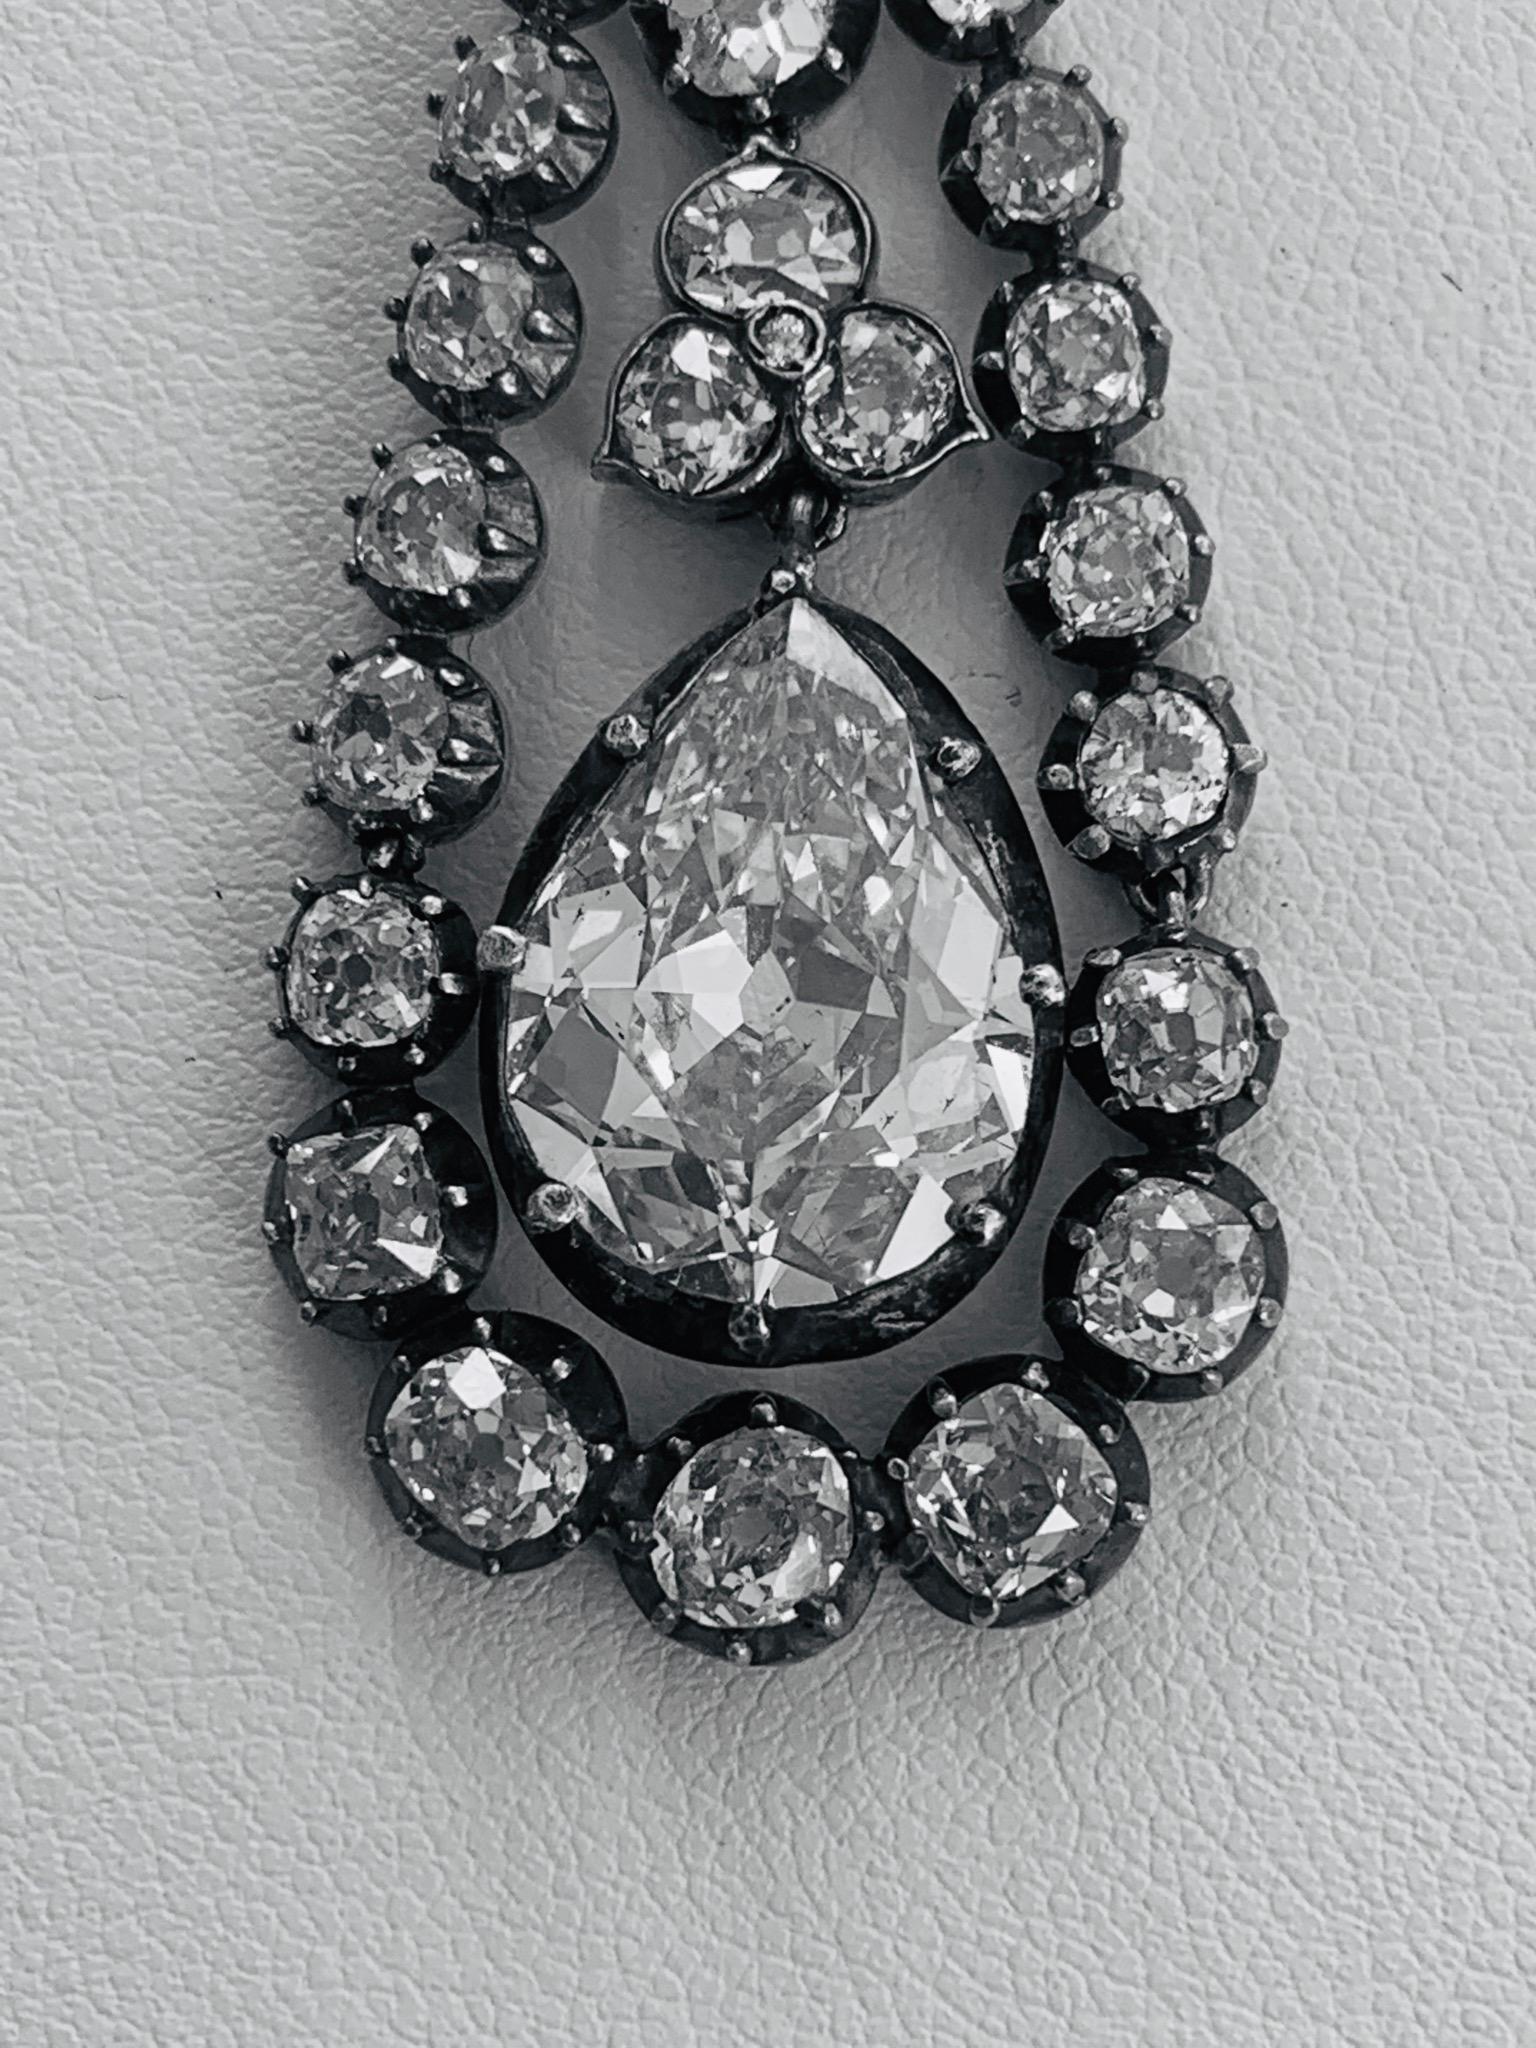 19th Century Diamond Pendent Ear Clips Estimated 27 Carat Total Weight (Frühviktorianisch)